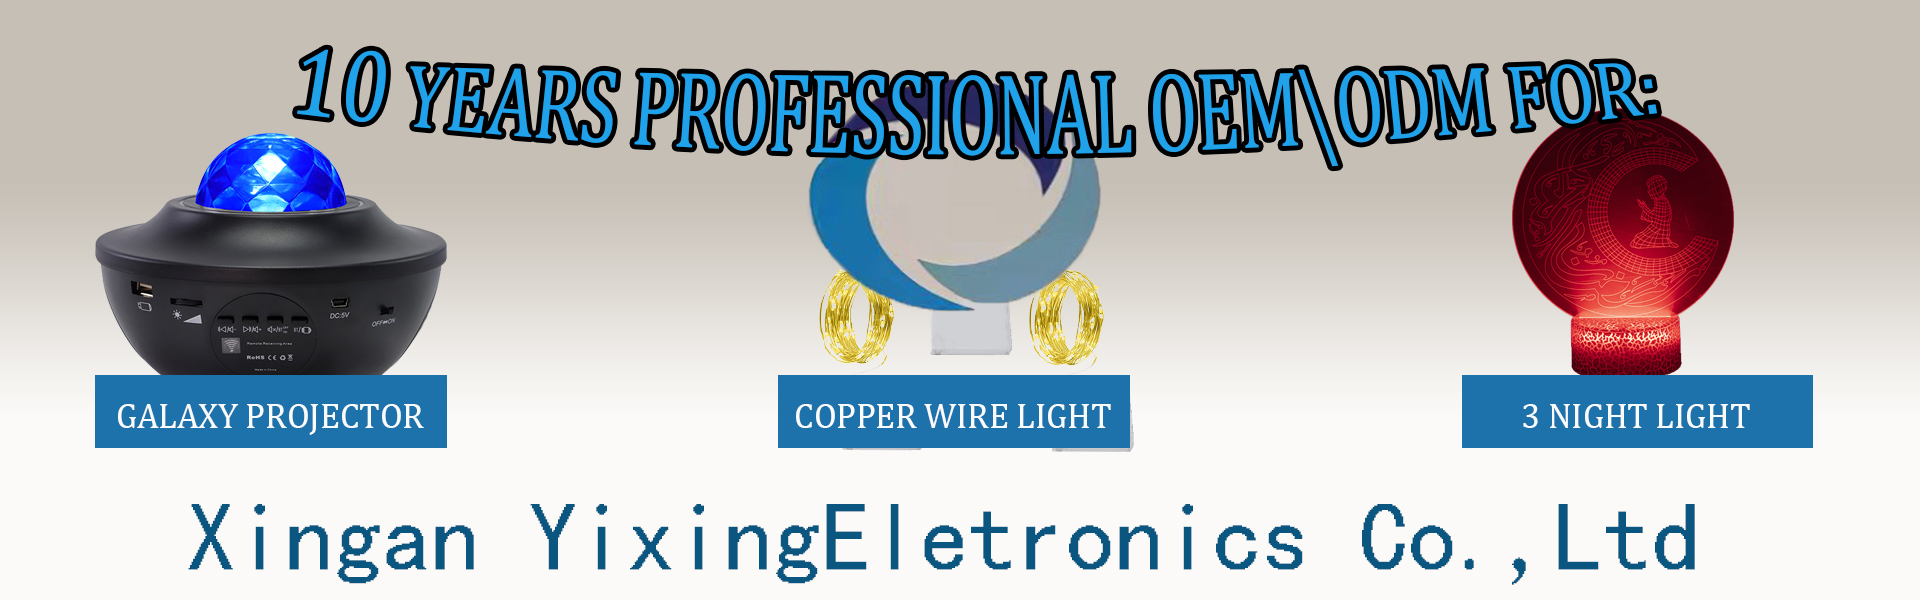 Kupfer-String-Licht, Sternenprojektor, 3D-Nachtlicht,Xingan Xian Yixing Electronics Co., Ltd.